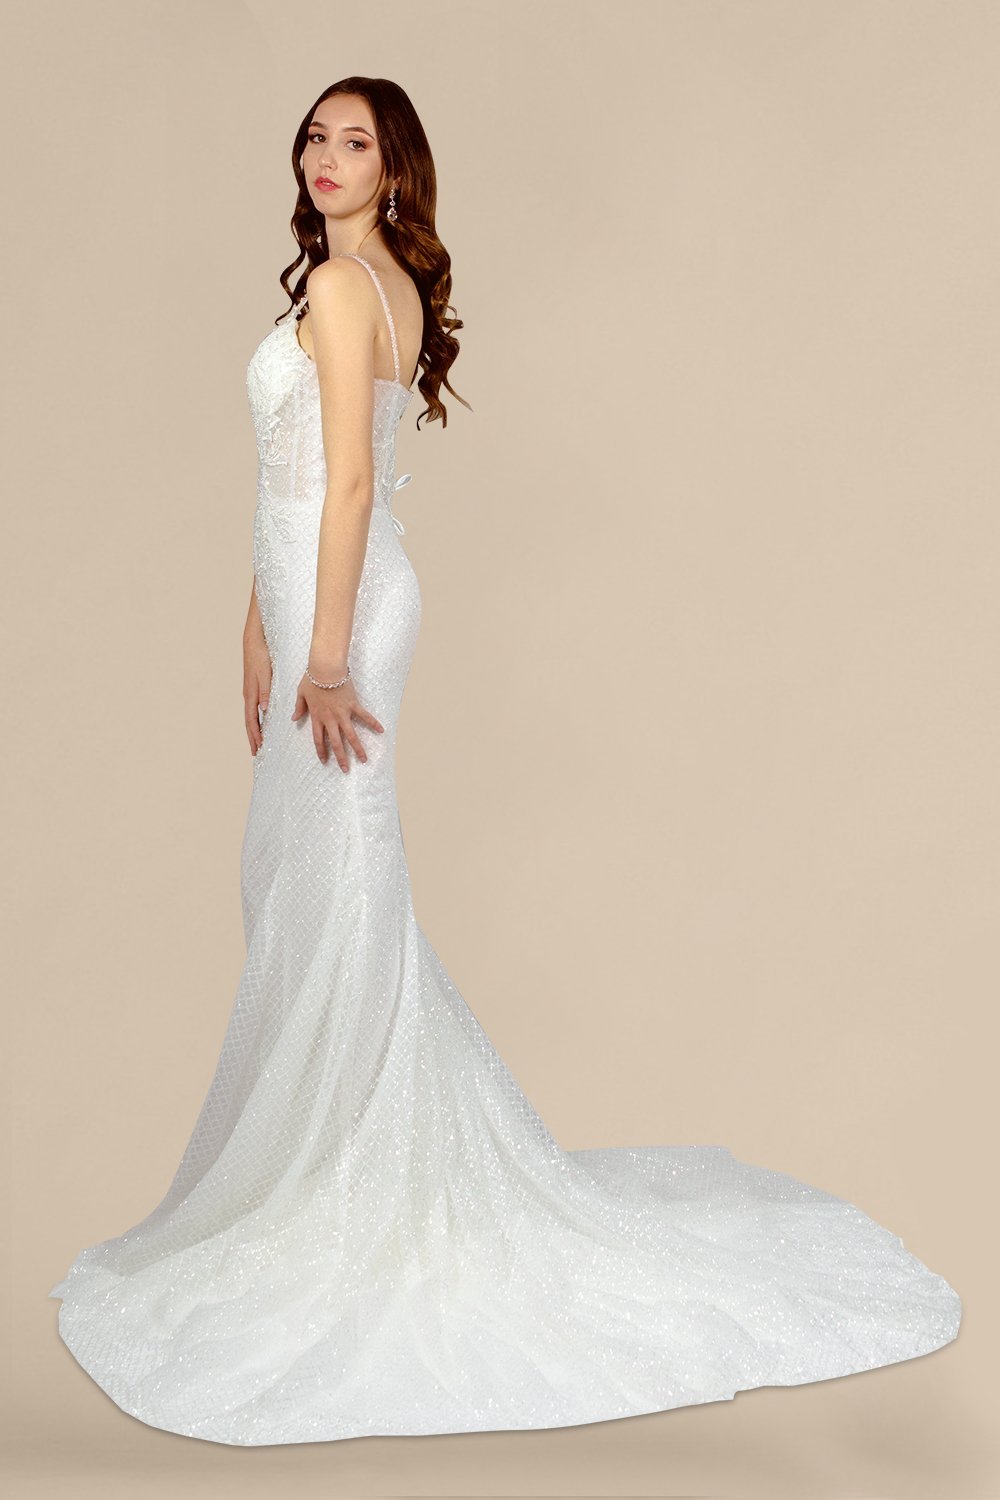 custom bridal gowns glitter shimmer wedding gowns perth australia online envious bridal & formal